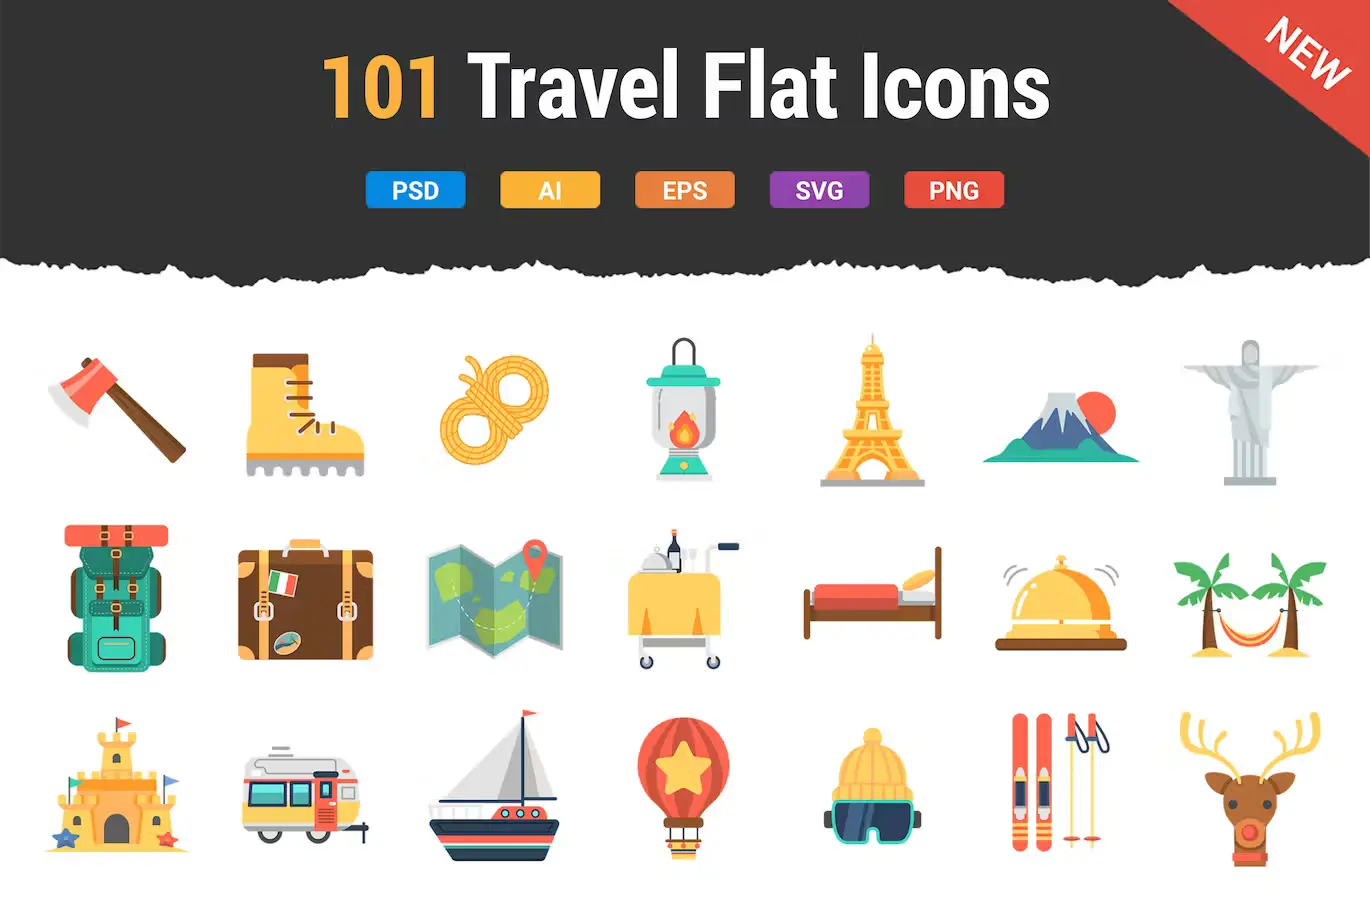 101 Travel Flat Icons